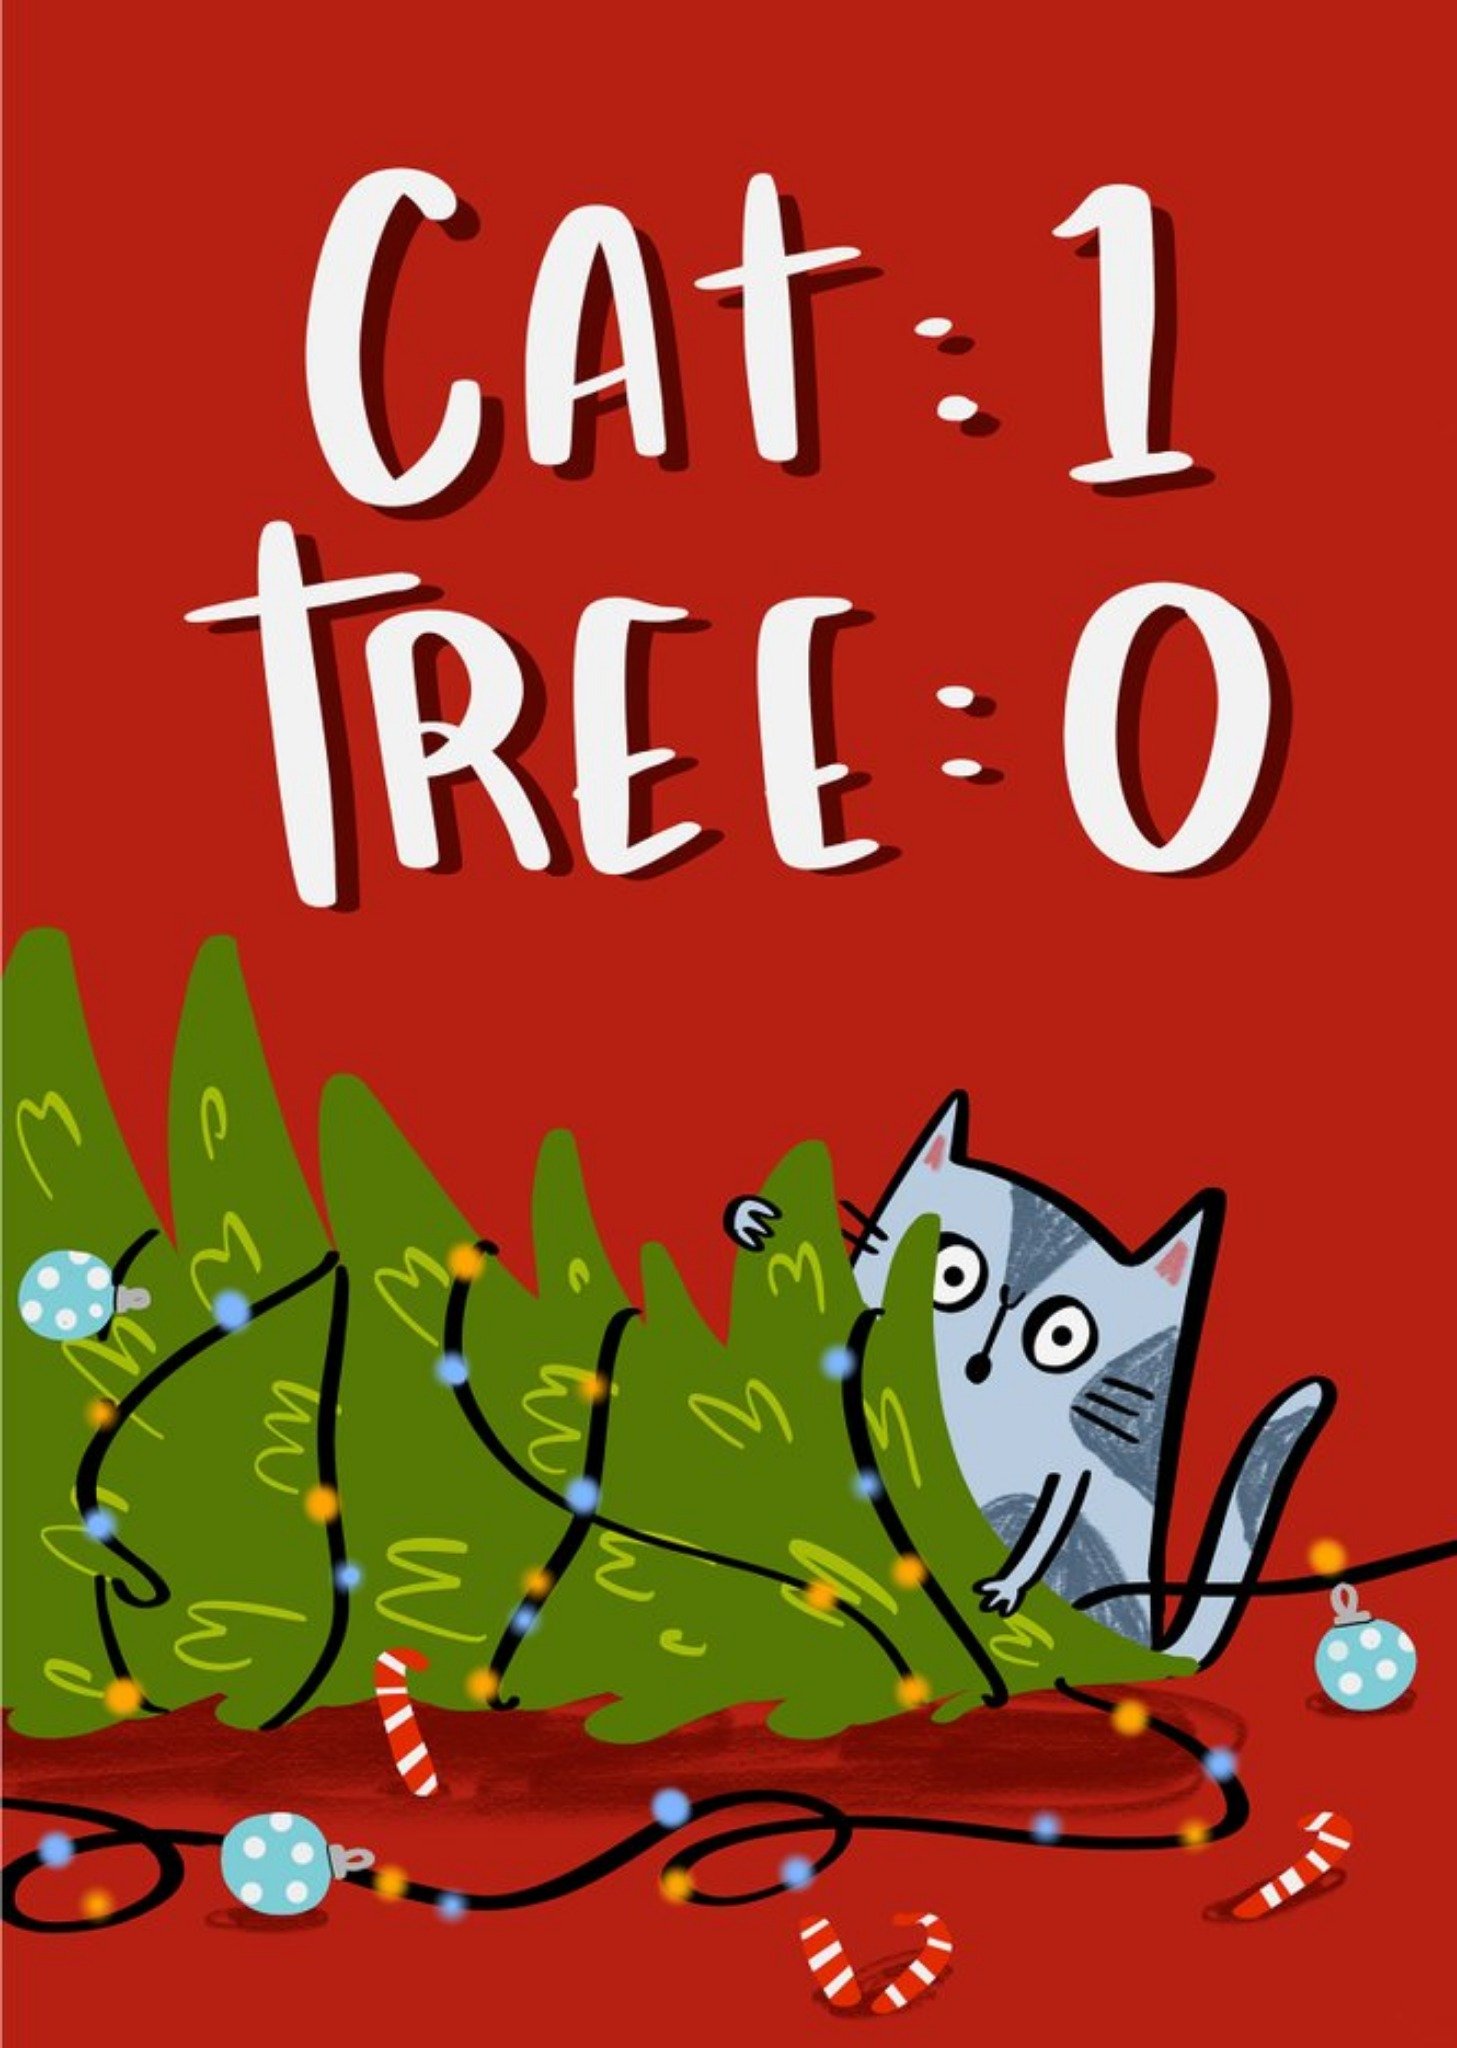 Moonpig Cute Illustration Cat One Tree Zero Chris Ecard